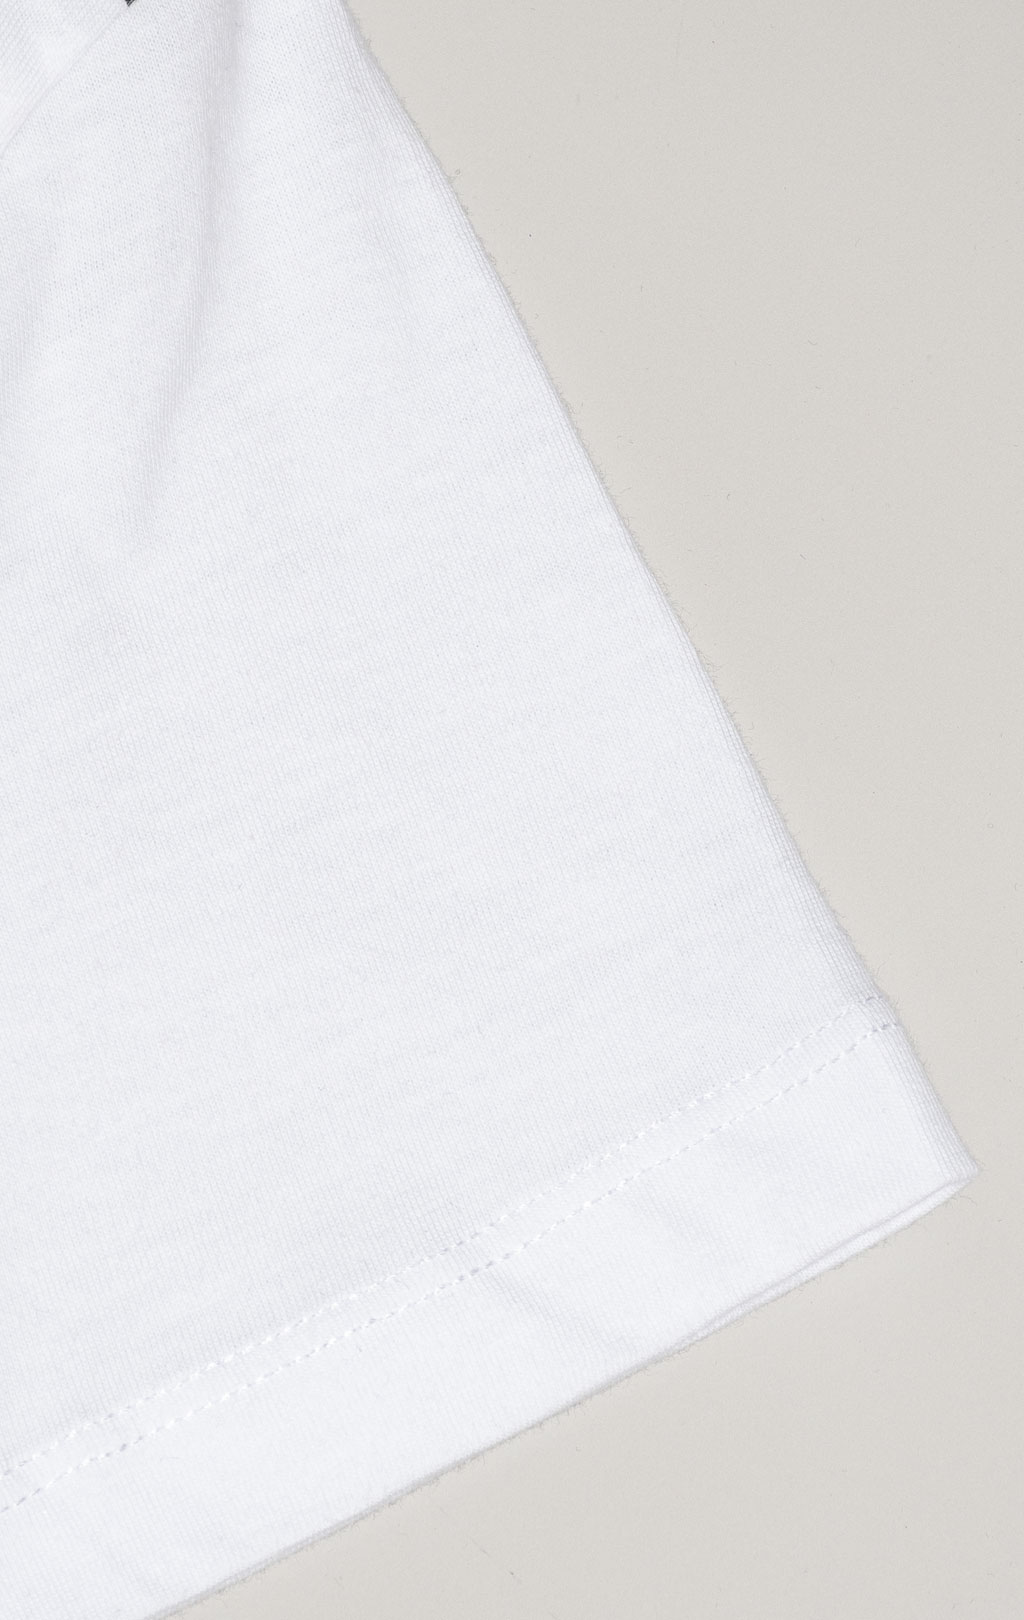 Женская футболка AERONAUTICA MILITARE SS 24/IT bianco ottico (TS 2246) 